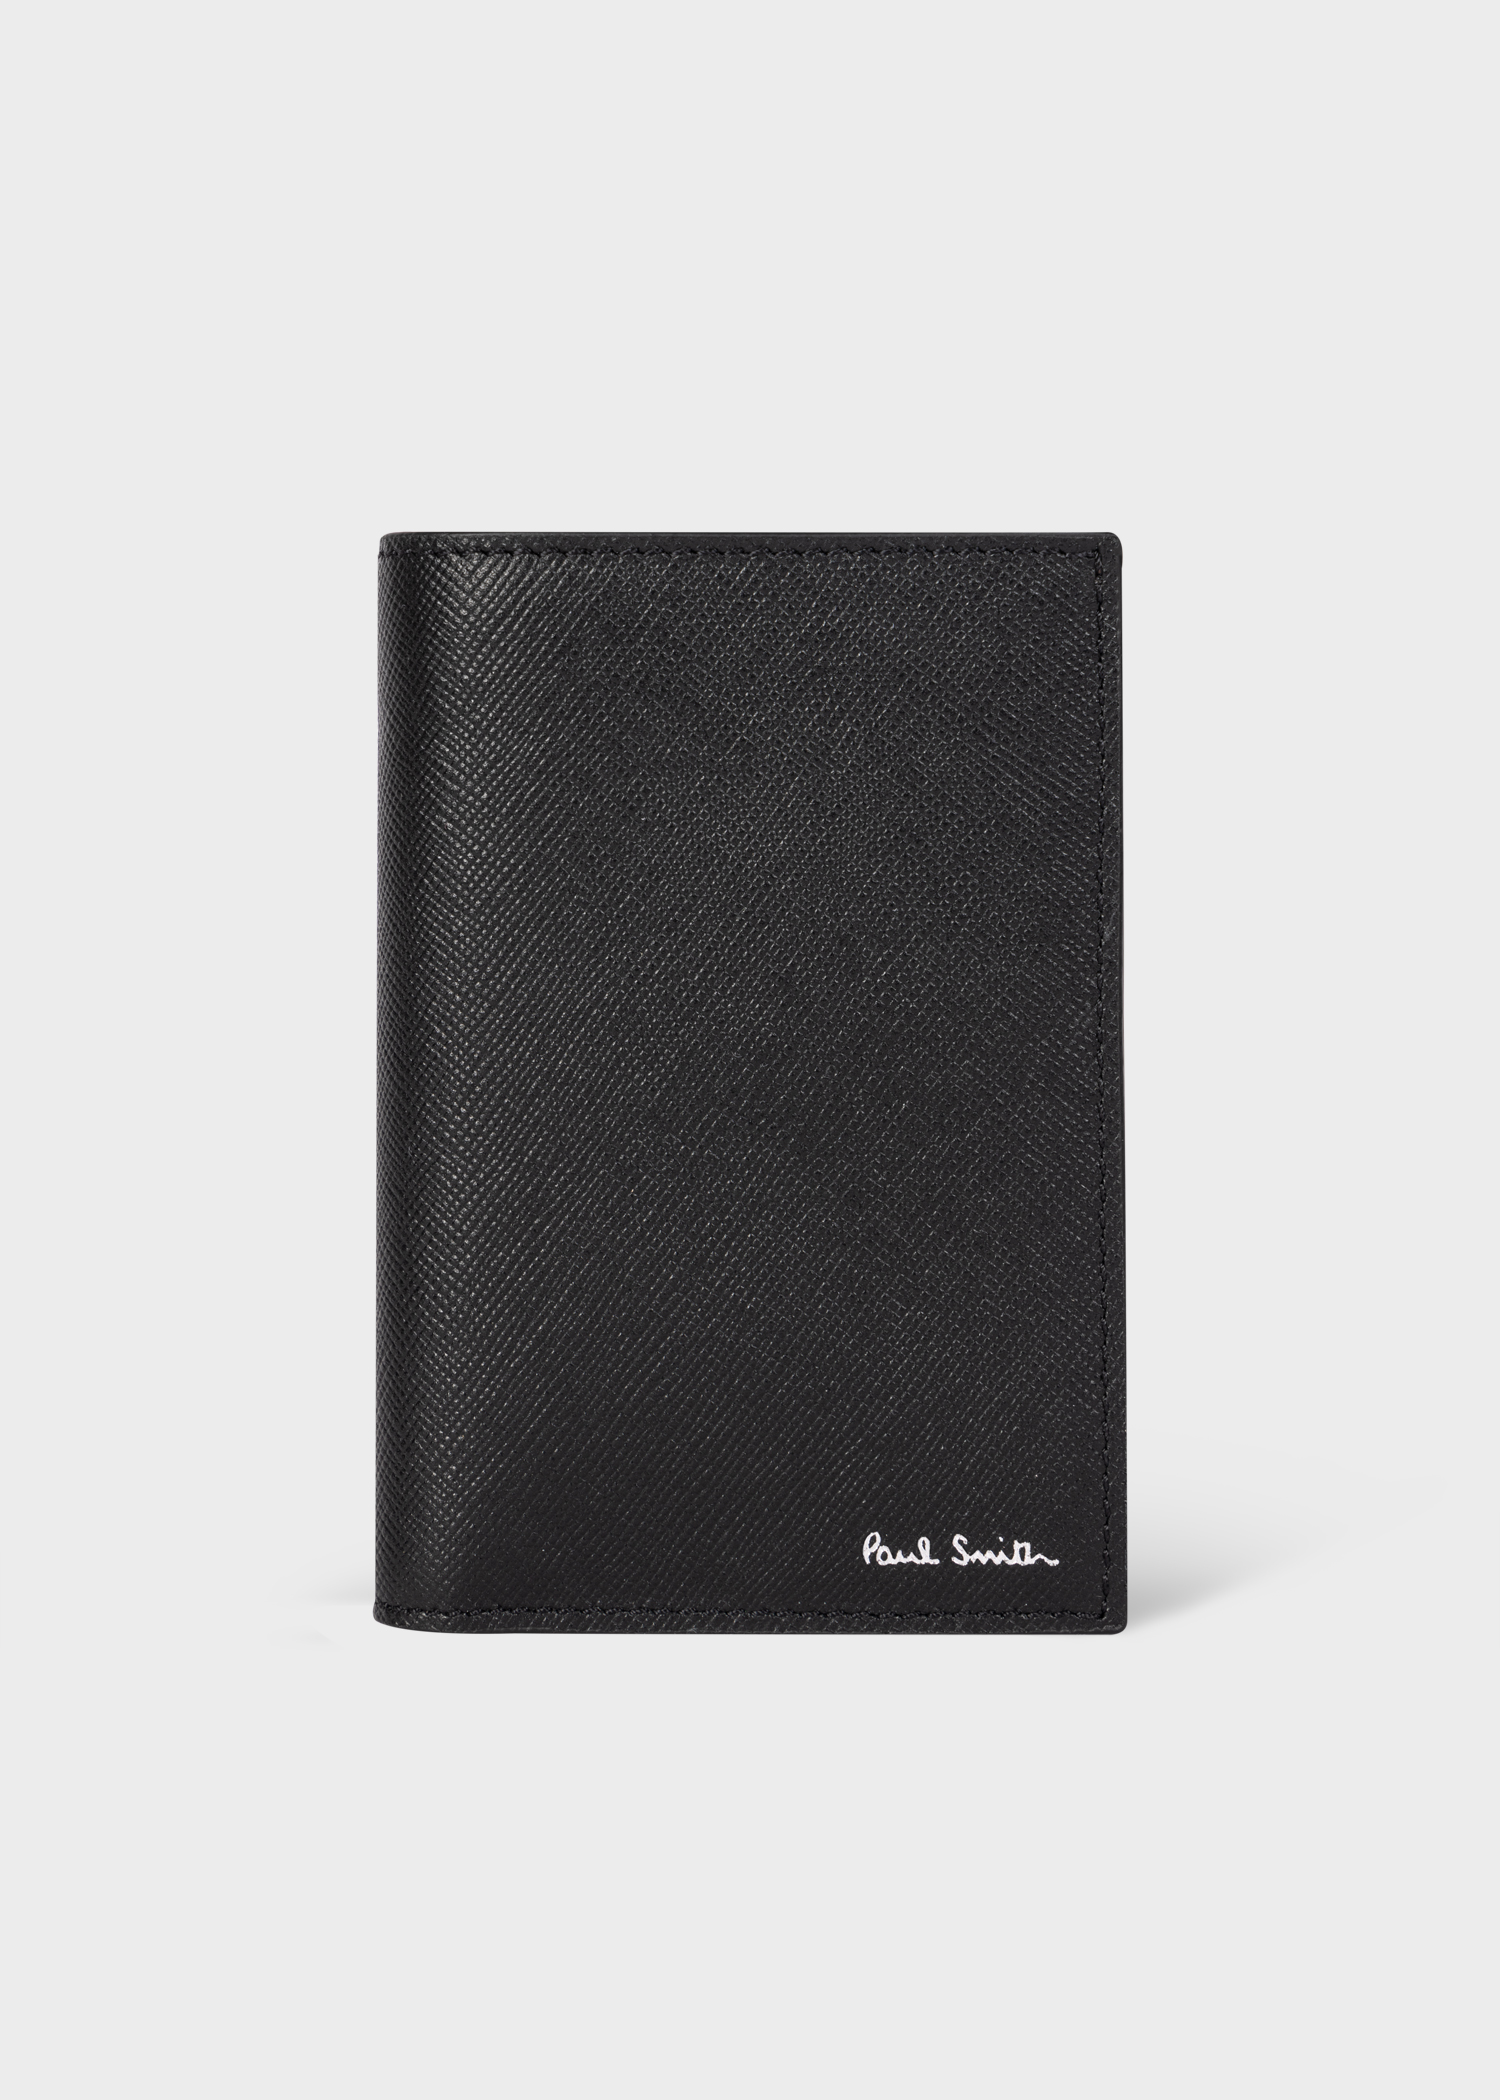 Designer Wallets for Men | Paul Smith